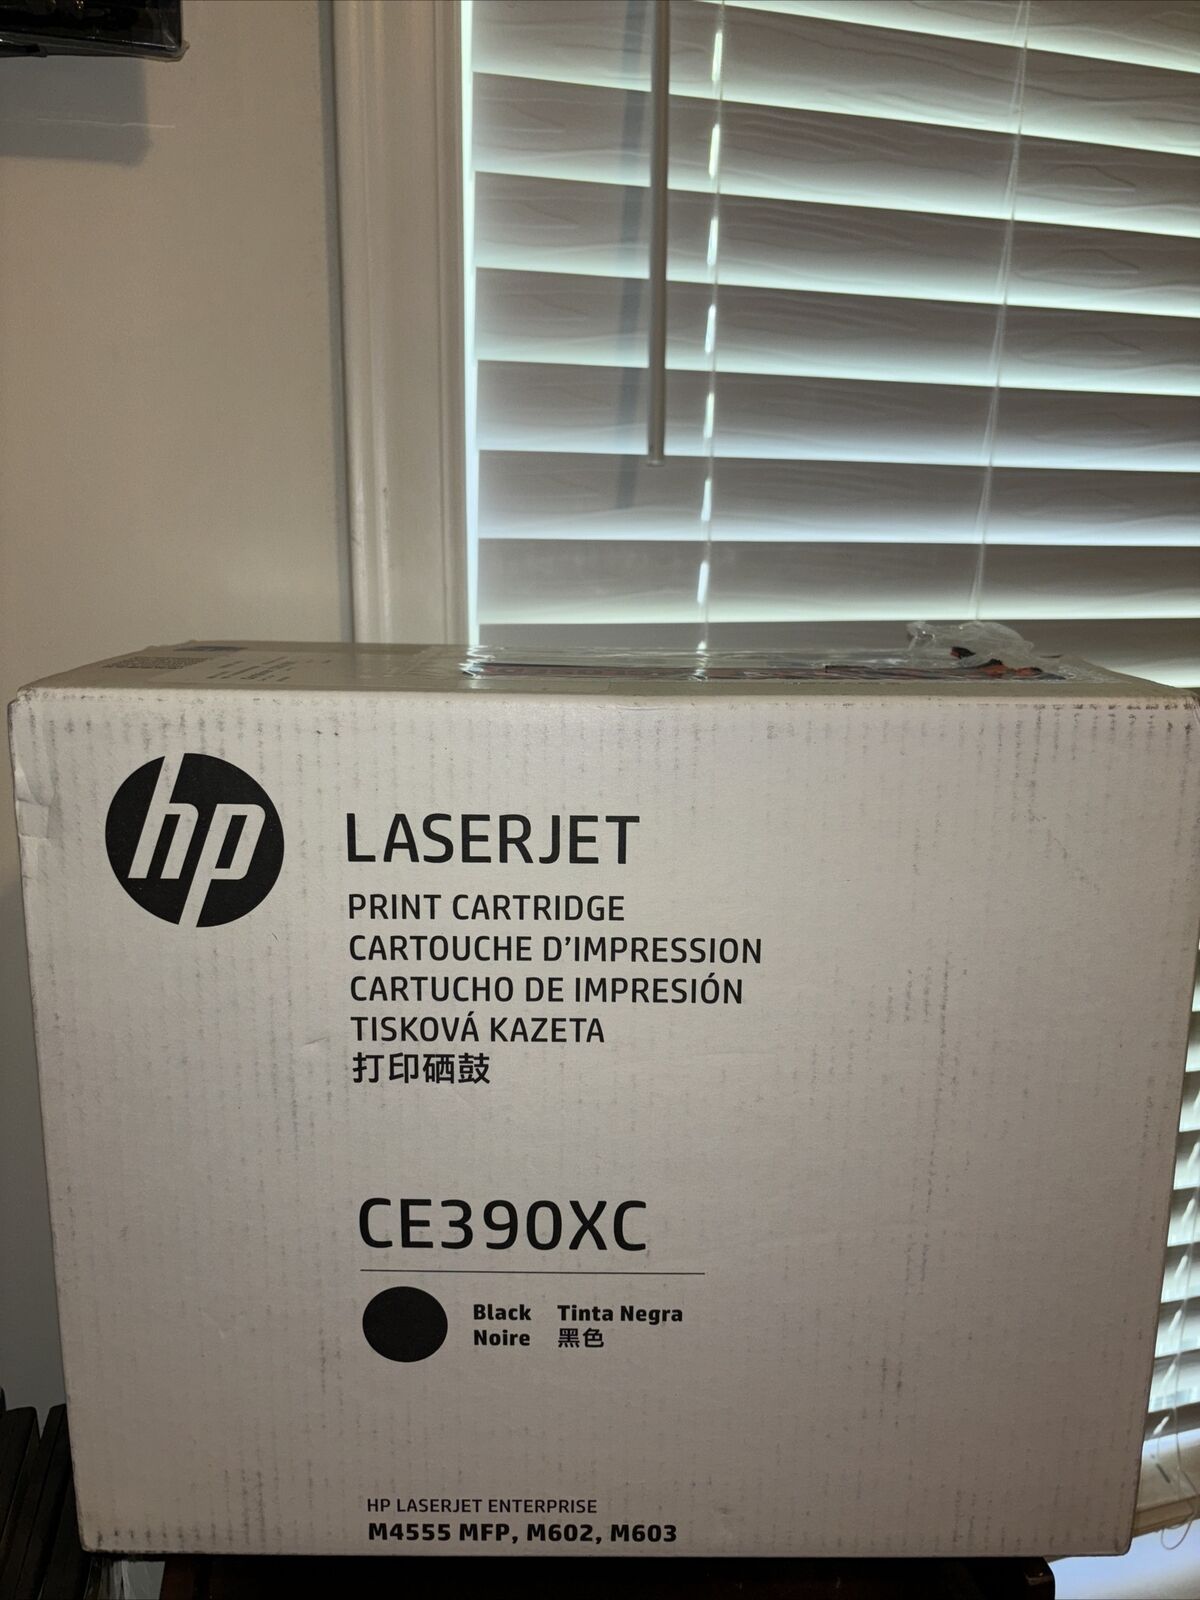 3 X Genuine HP LaserJet Enterprise M4555 MFP, M602, M603 Cartridge CE390XC